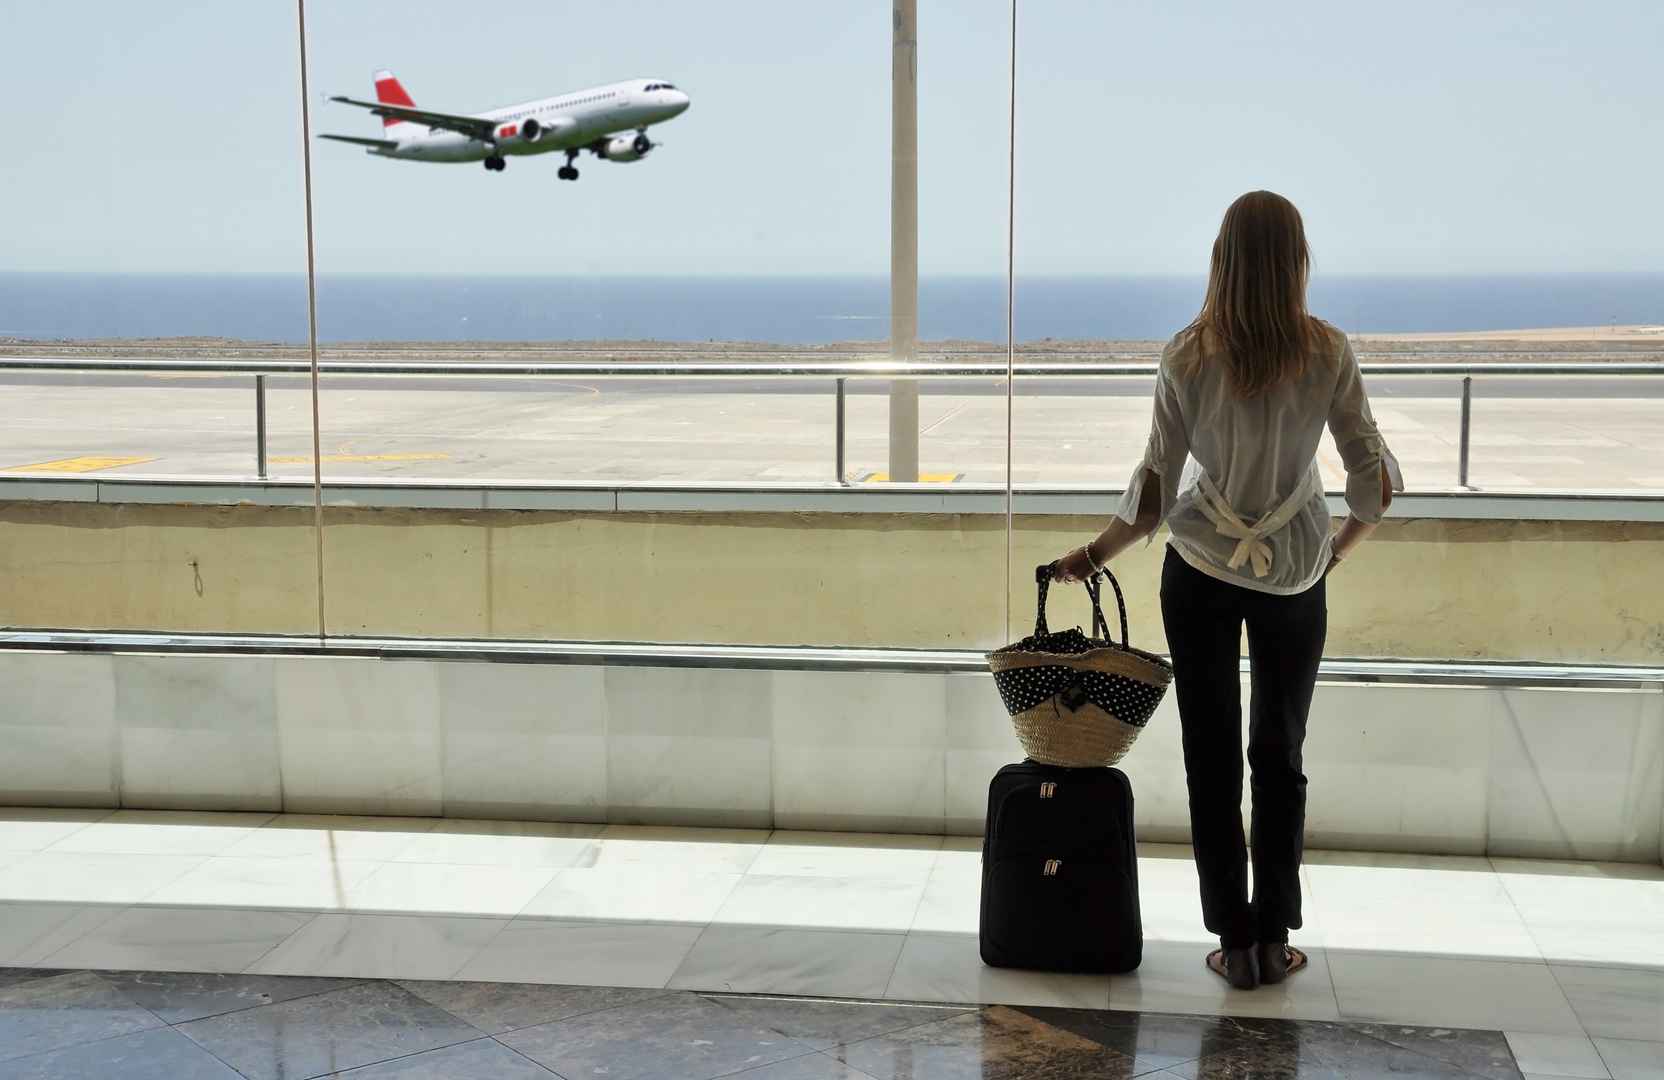 دو فرودگاه بین المللی استان آنتالیا کدامند؟